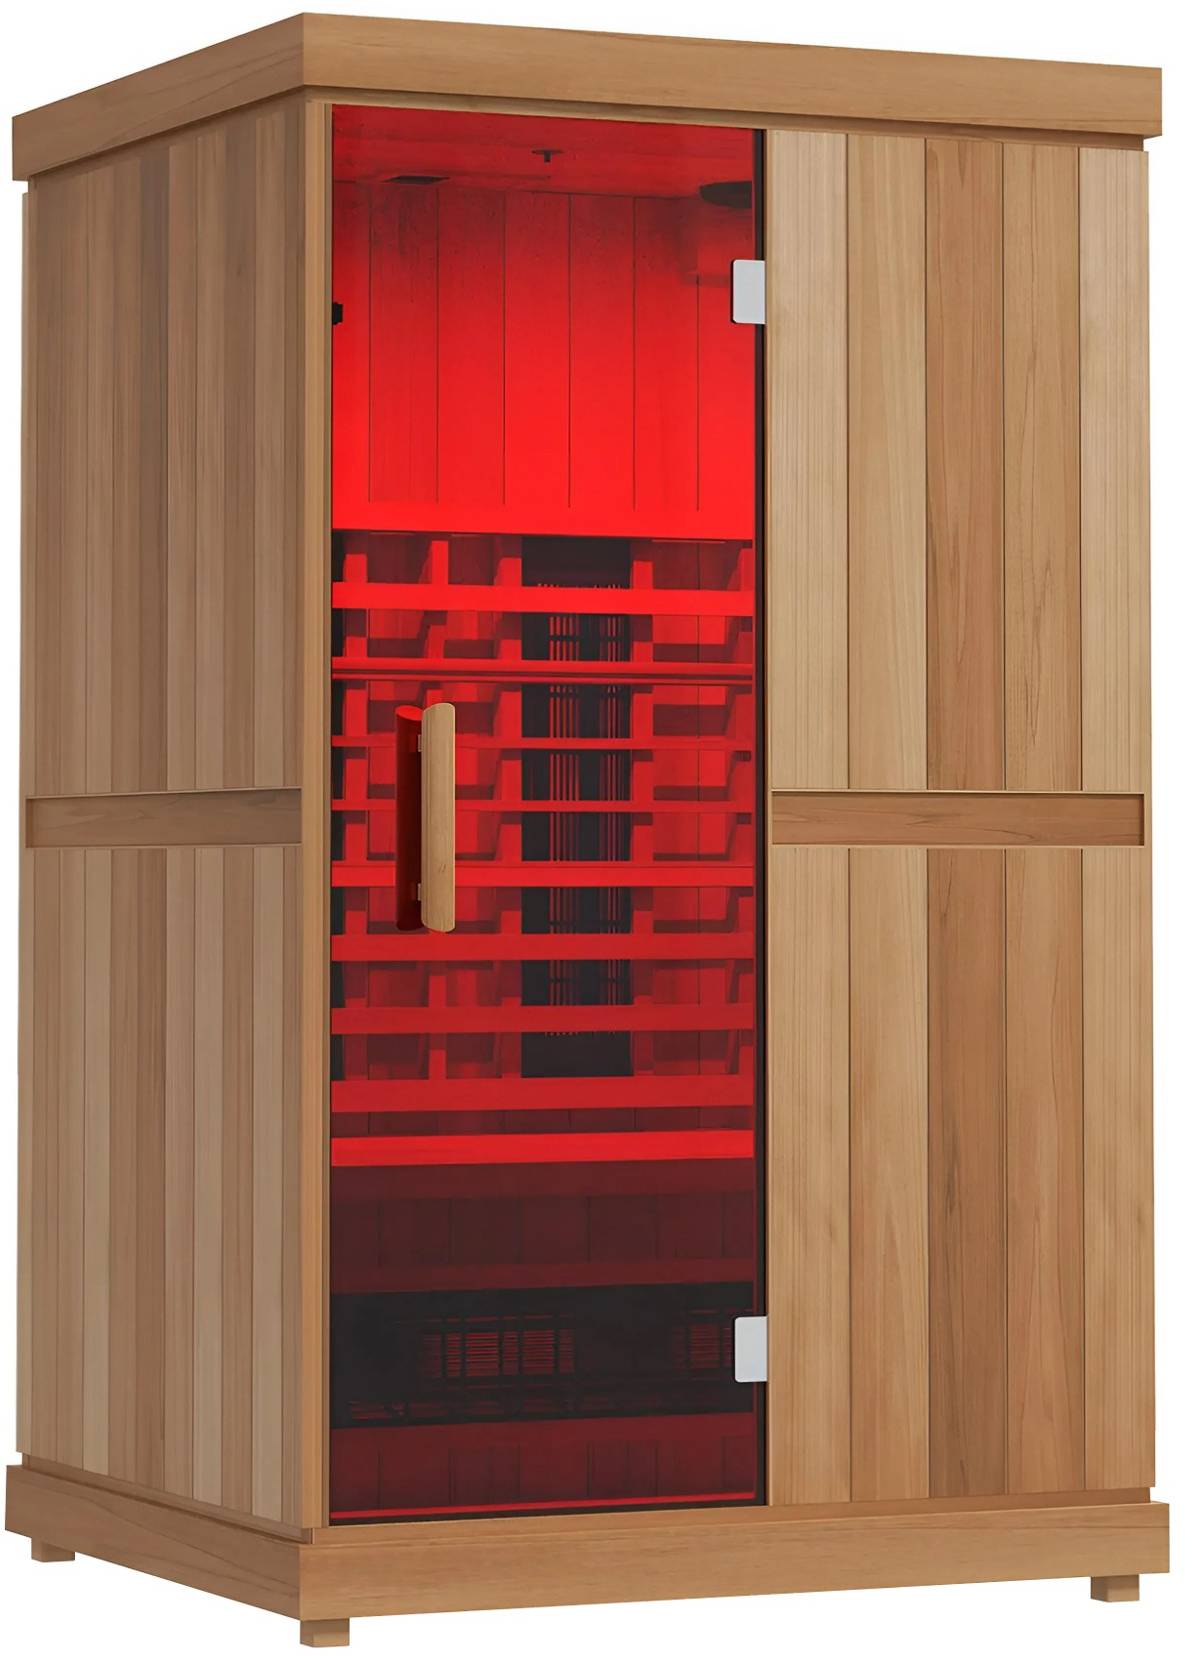 ZiahCare's Finnmark Designs 2 Person Full-Spectrum Infrared Sauna Mockup Image 1